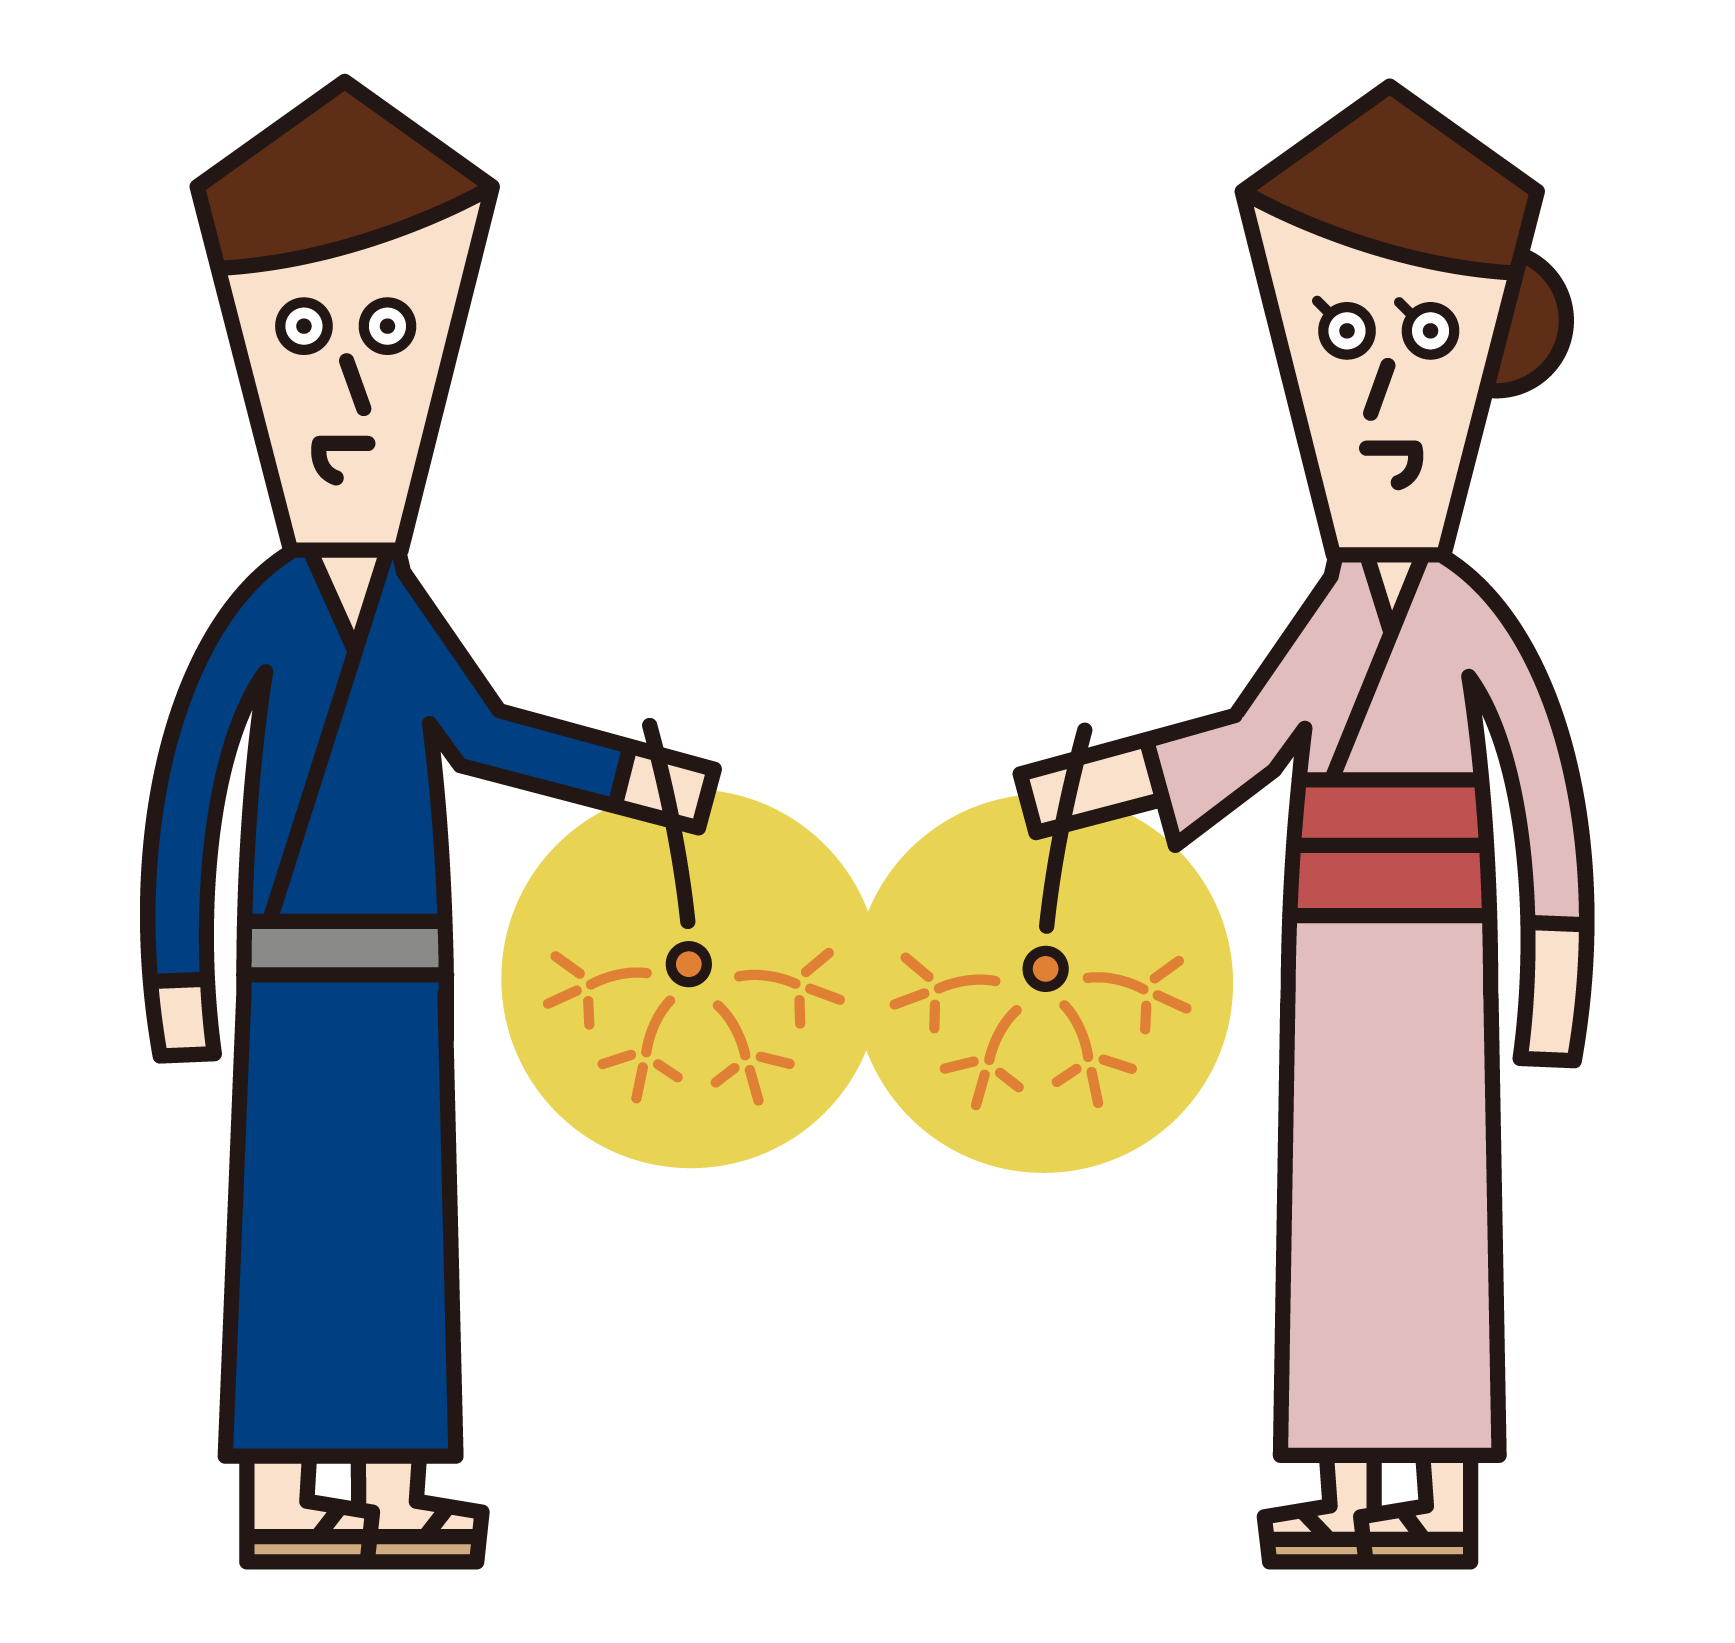 Illustration of a couple wearing a yukata enjoying incense fireworks